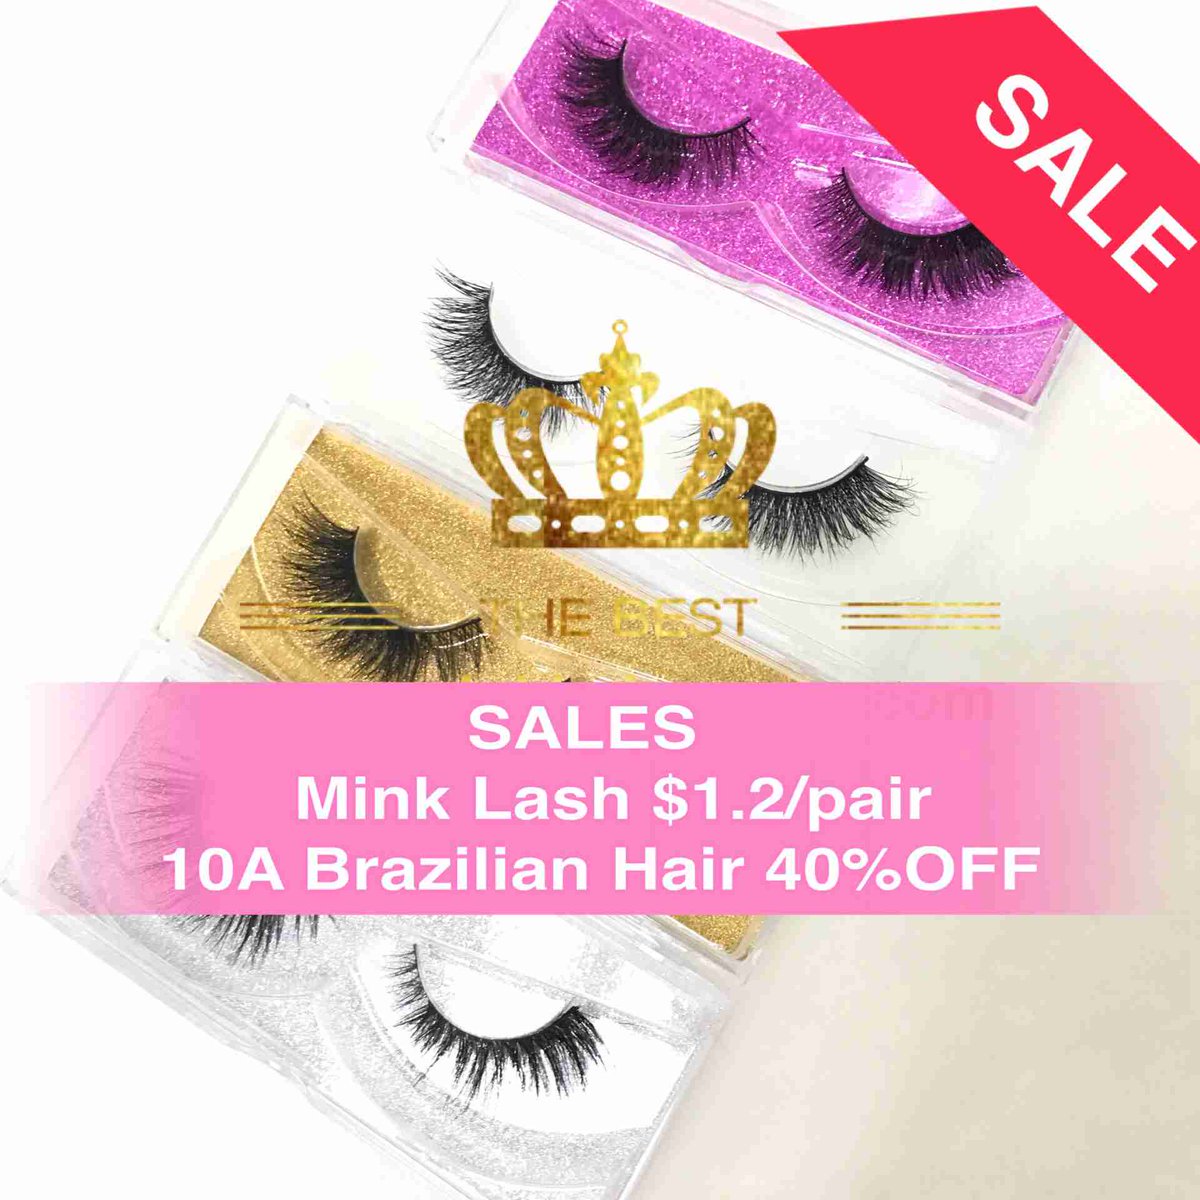 Mother's Day Sales! 3D Mink Lash Only $2.5/pair! 
#lashpro #stripminklashes #volumerusso #megavolume #lashpacking #minkstrips #lashcases #customlashbag #makeupartist #makeupideas #eyebrows #eyebrowsonfleek #makeuplashes #3dsilklashes #eyelook #eyelashpacking #makeupjunkie